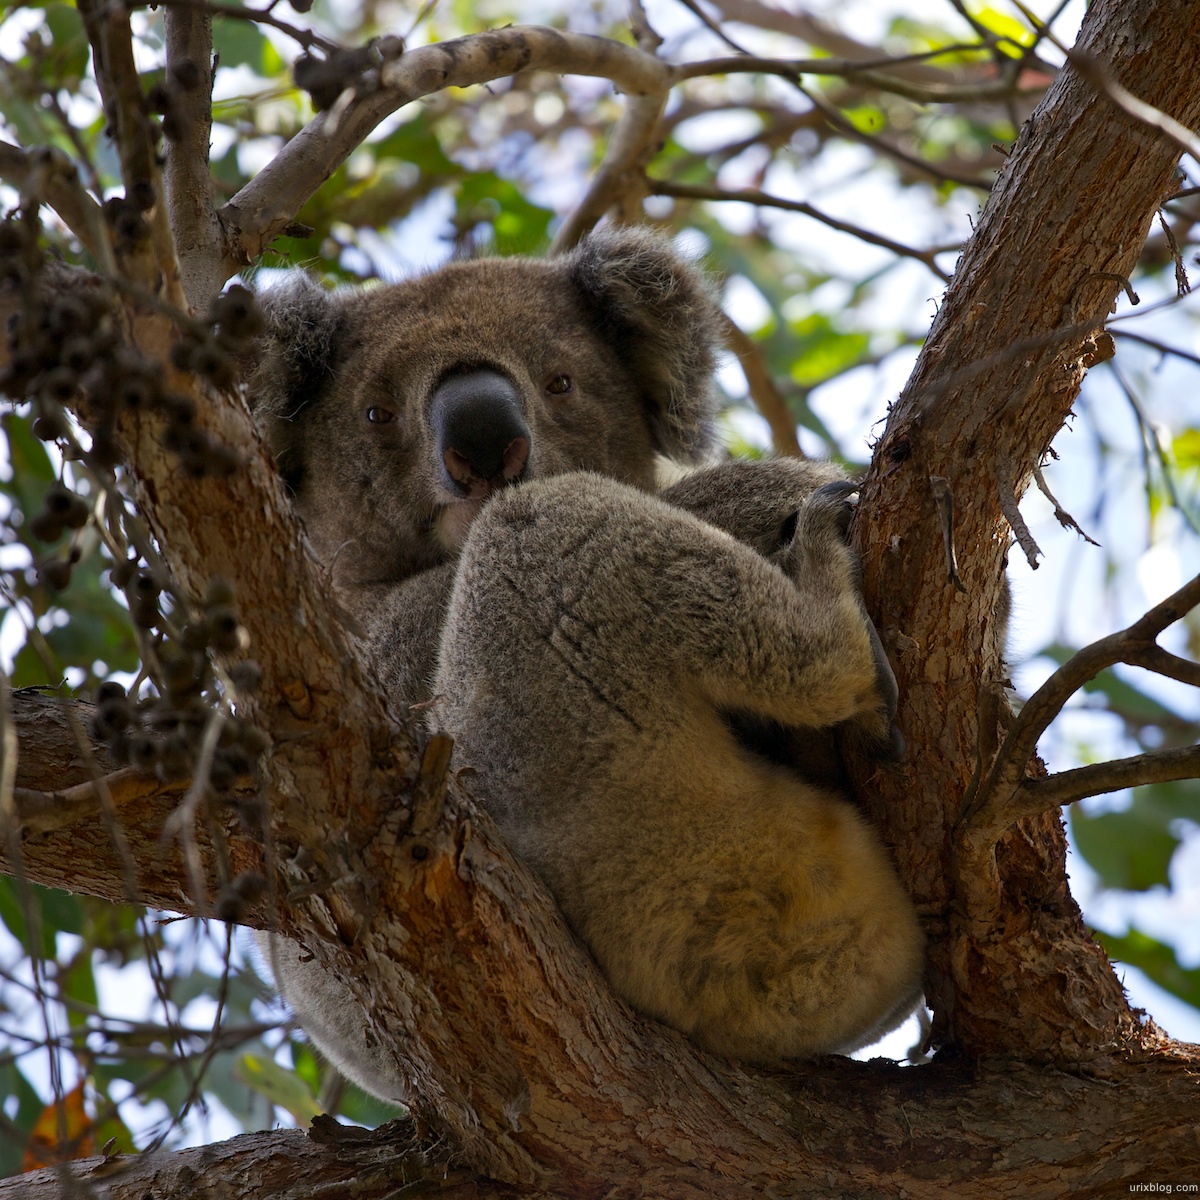 2011 2010 South Australia, Kangaroo Island, Остров Кенгуру, Южная Австралия, koala, коала